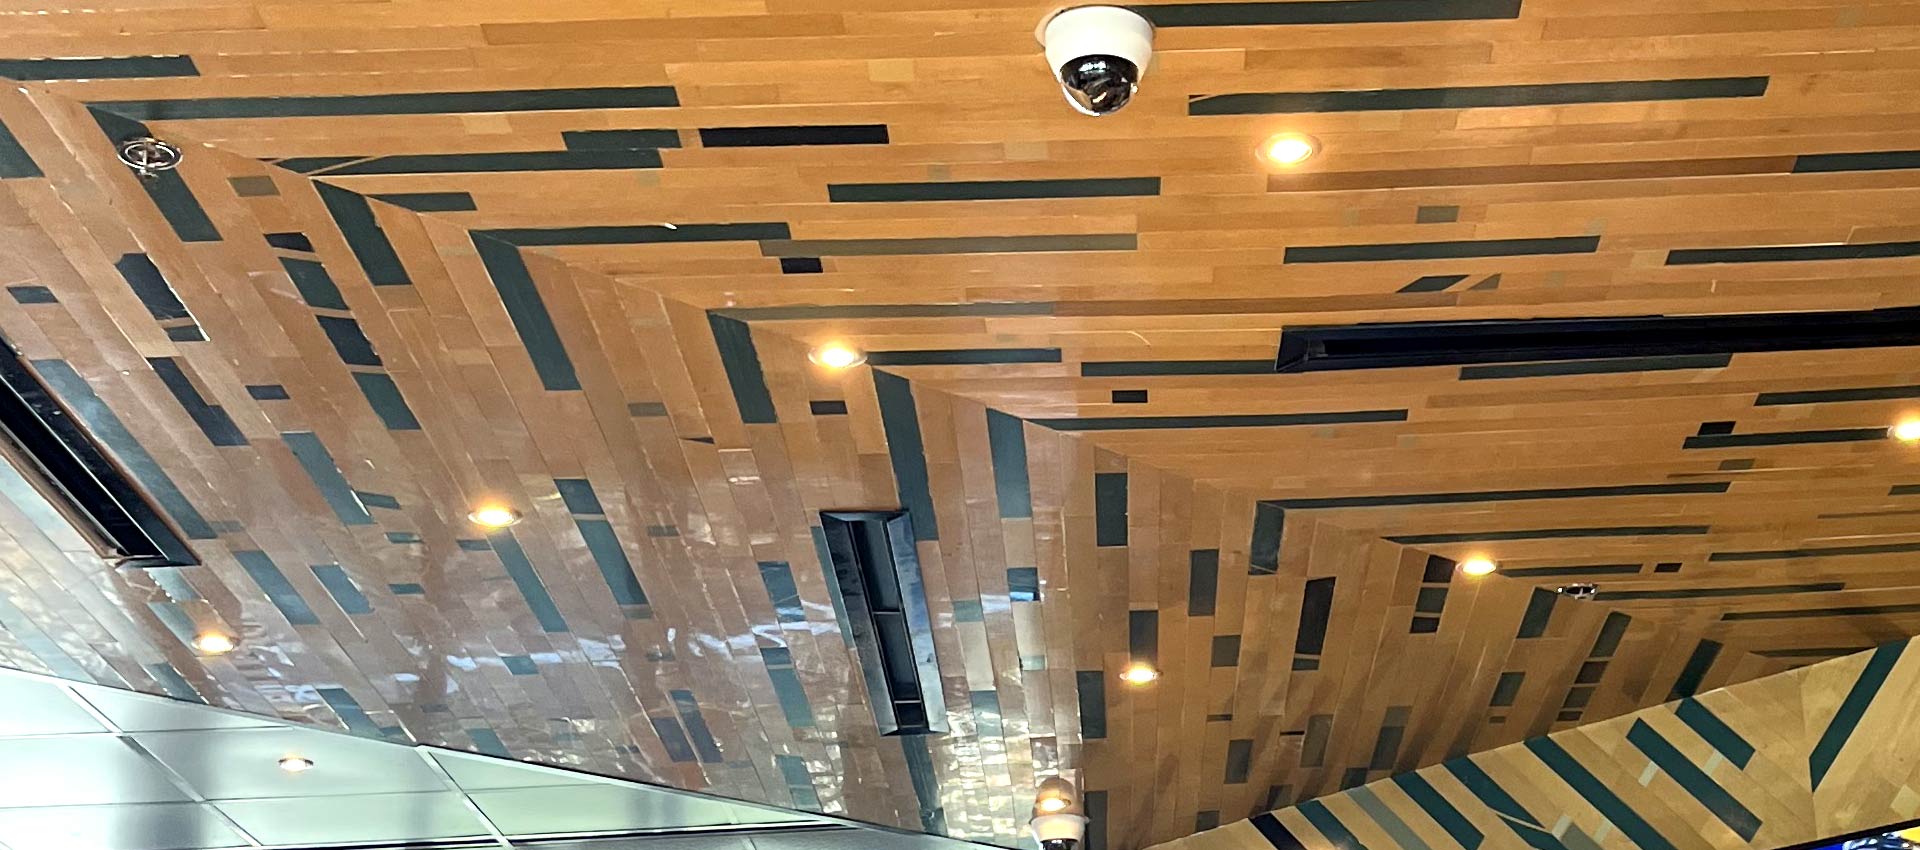 repurposed gym flooring ceiling